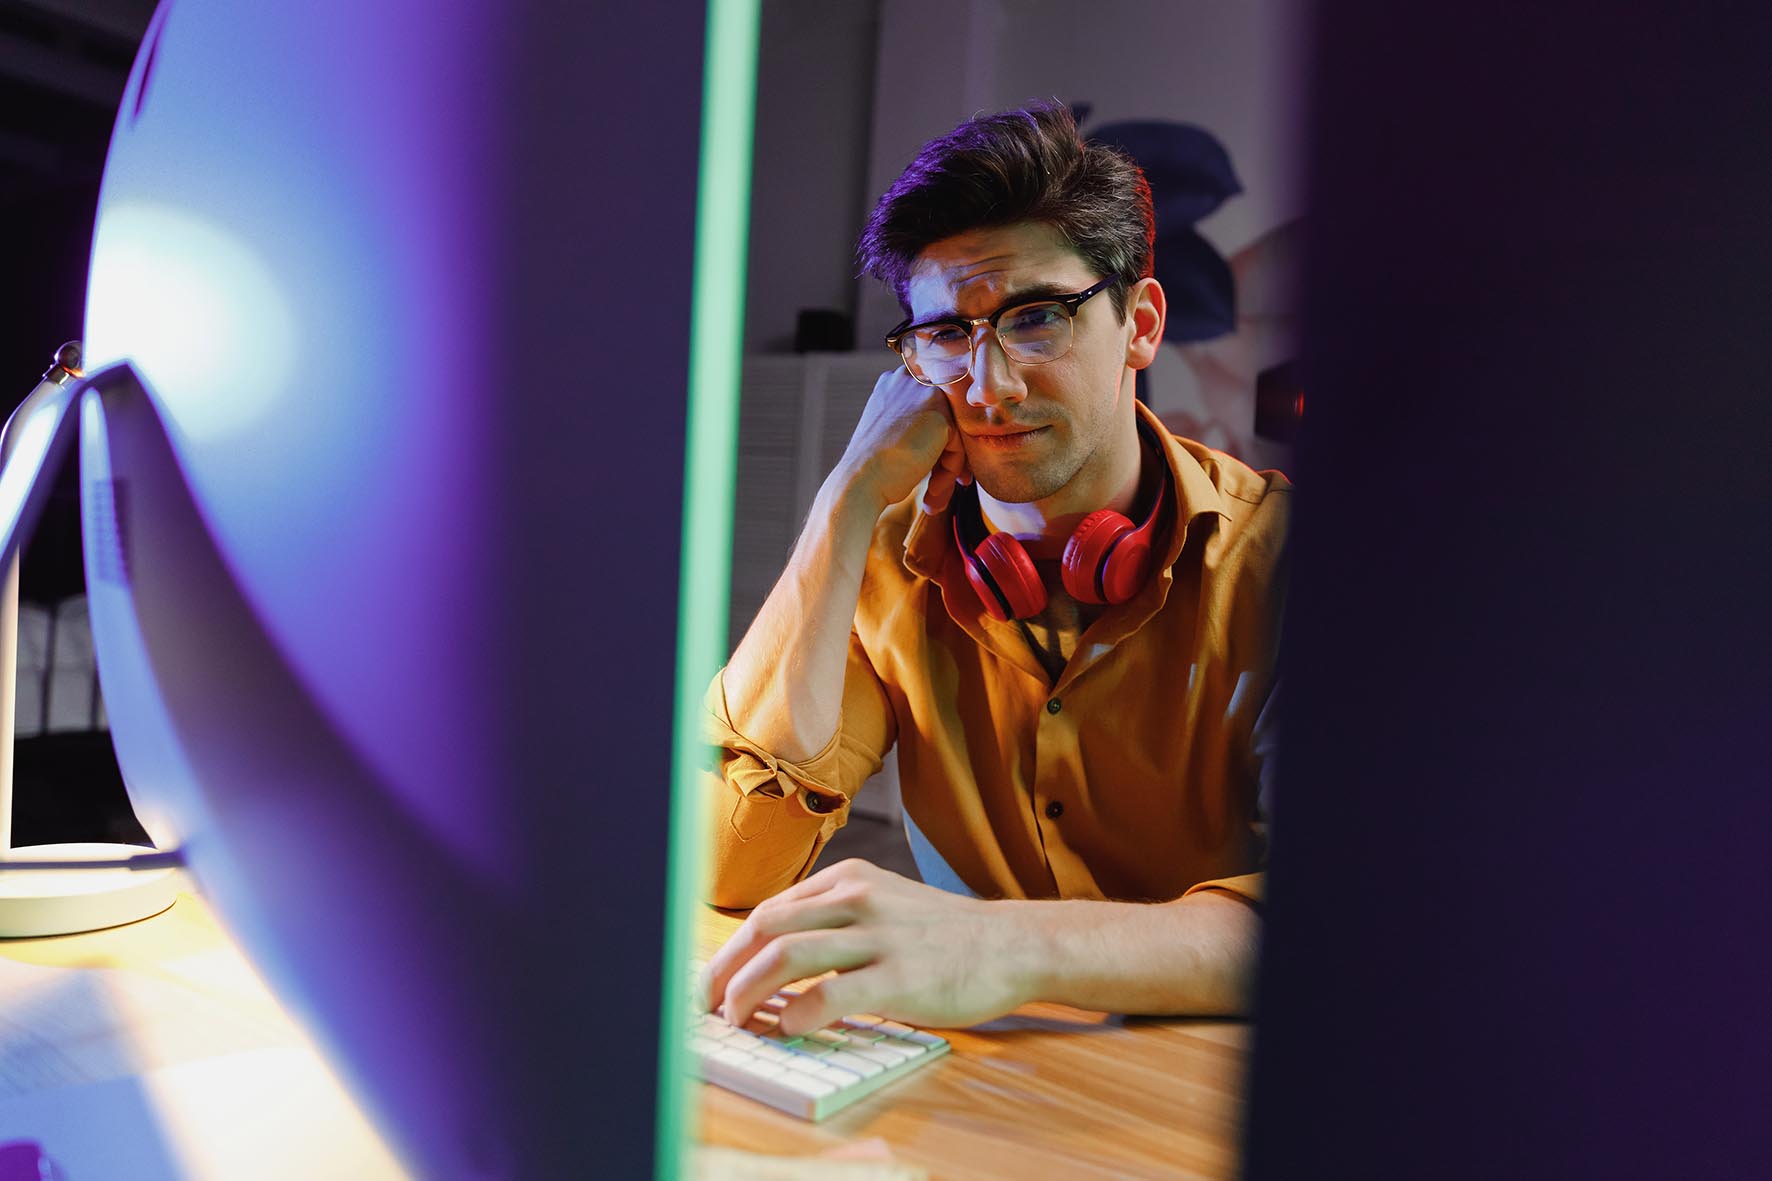 Young man at desk looking at screen, tired